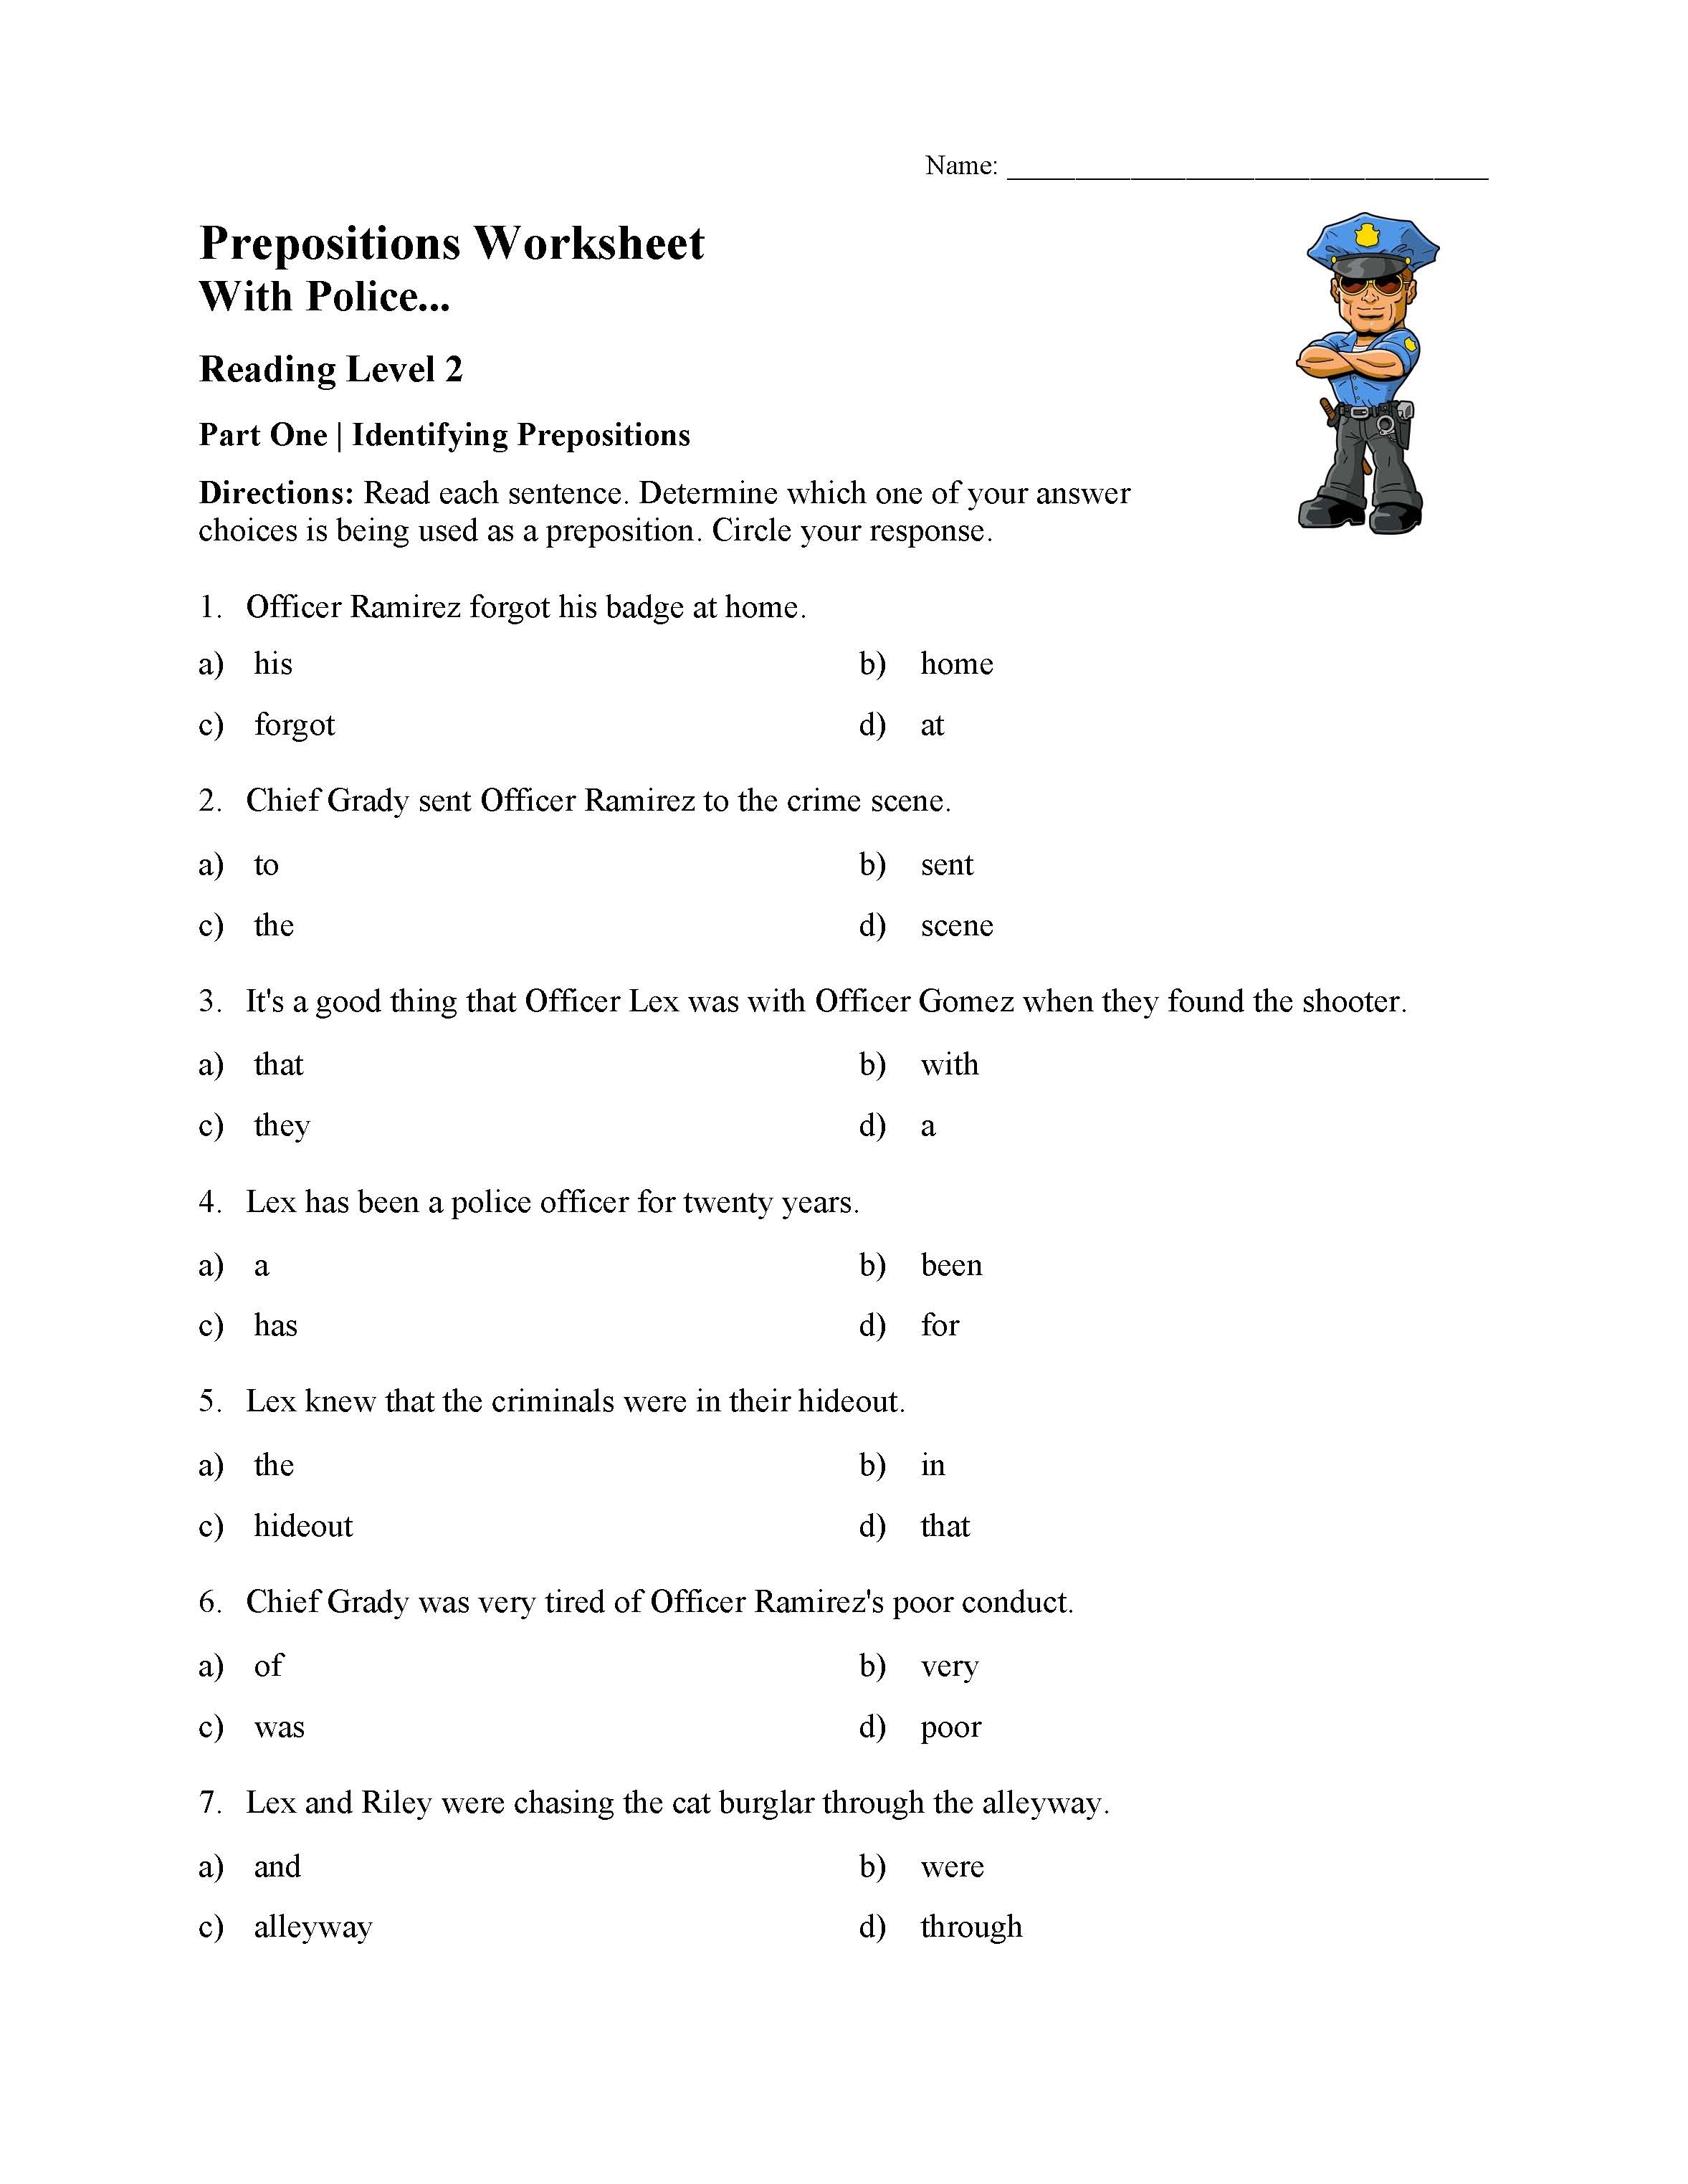 preposition worksheet 1 reading level 2 preview